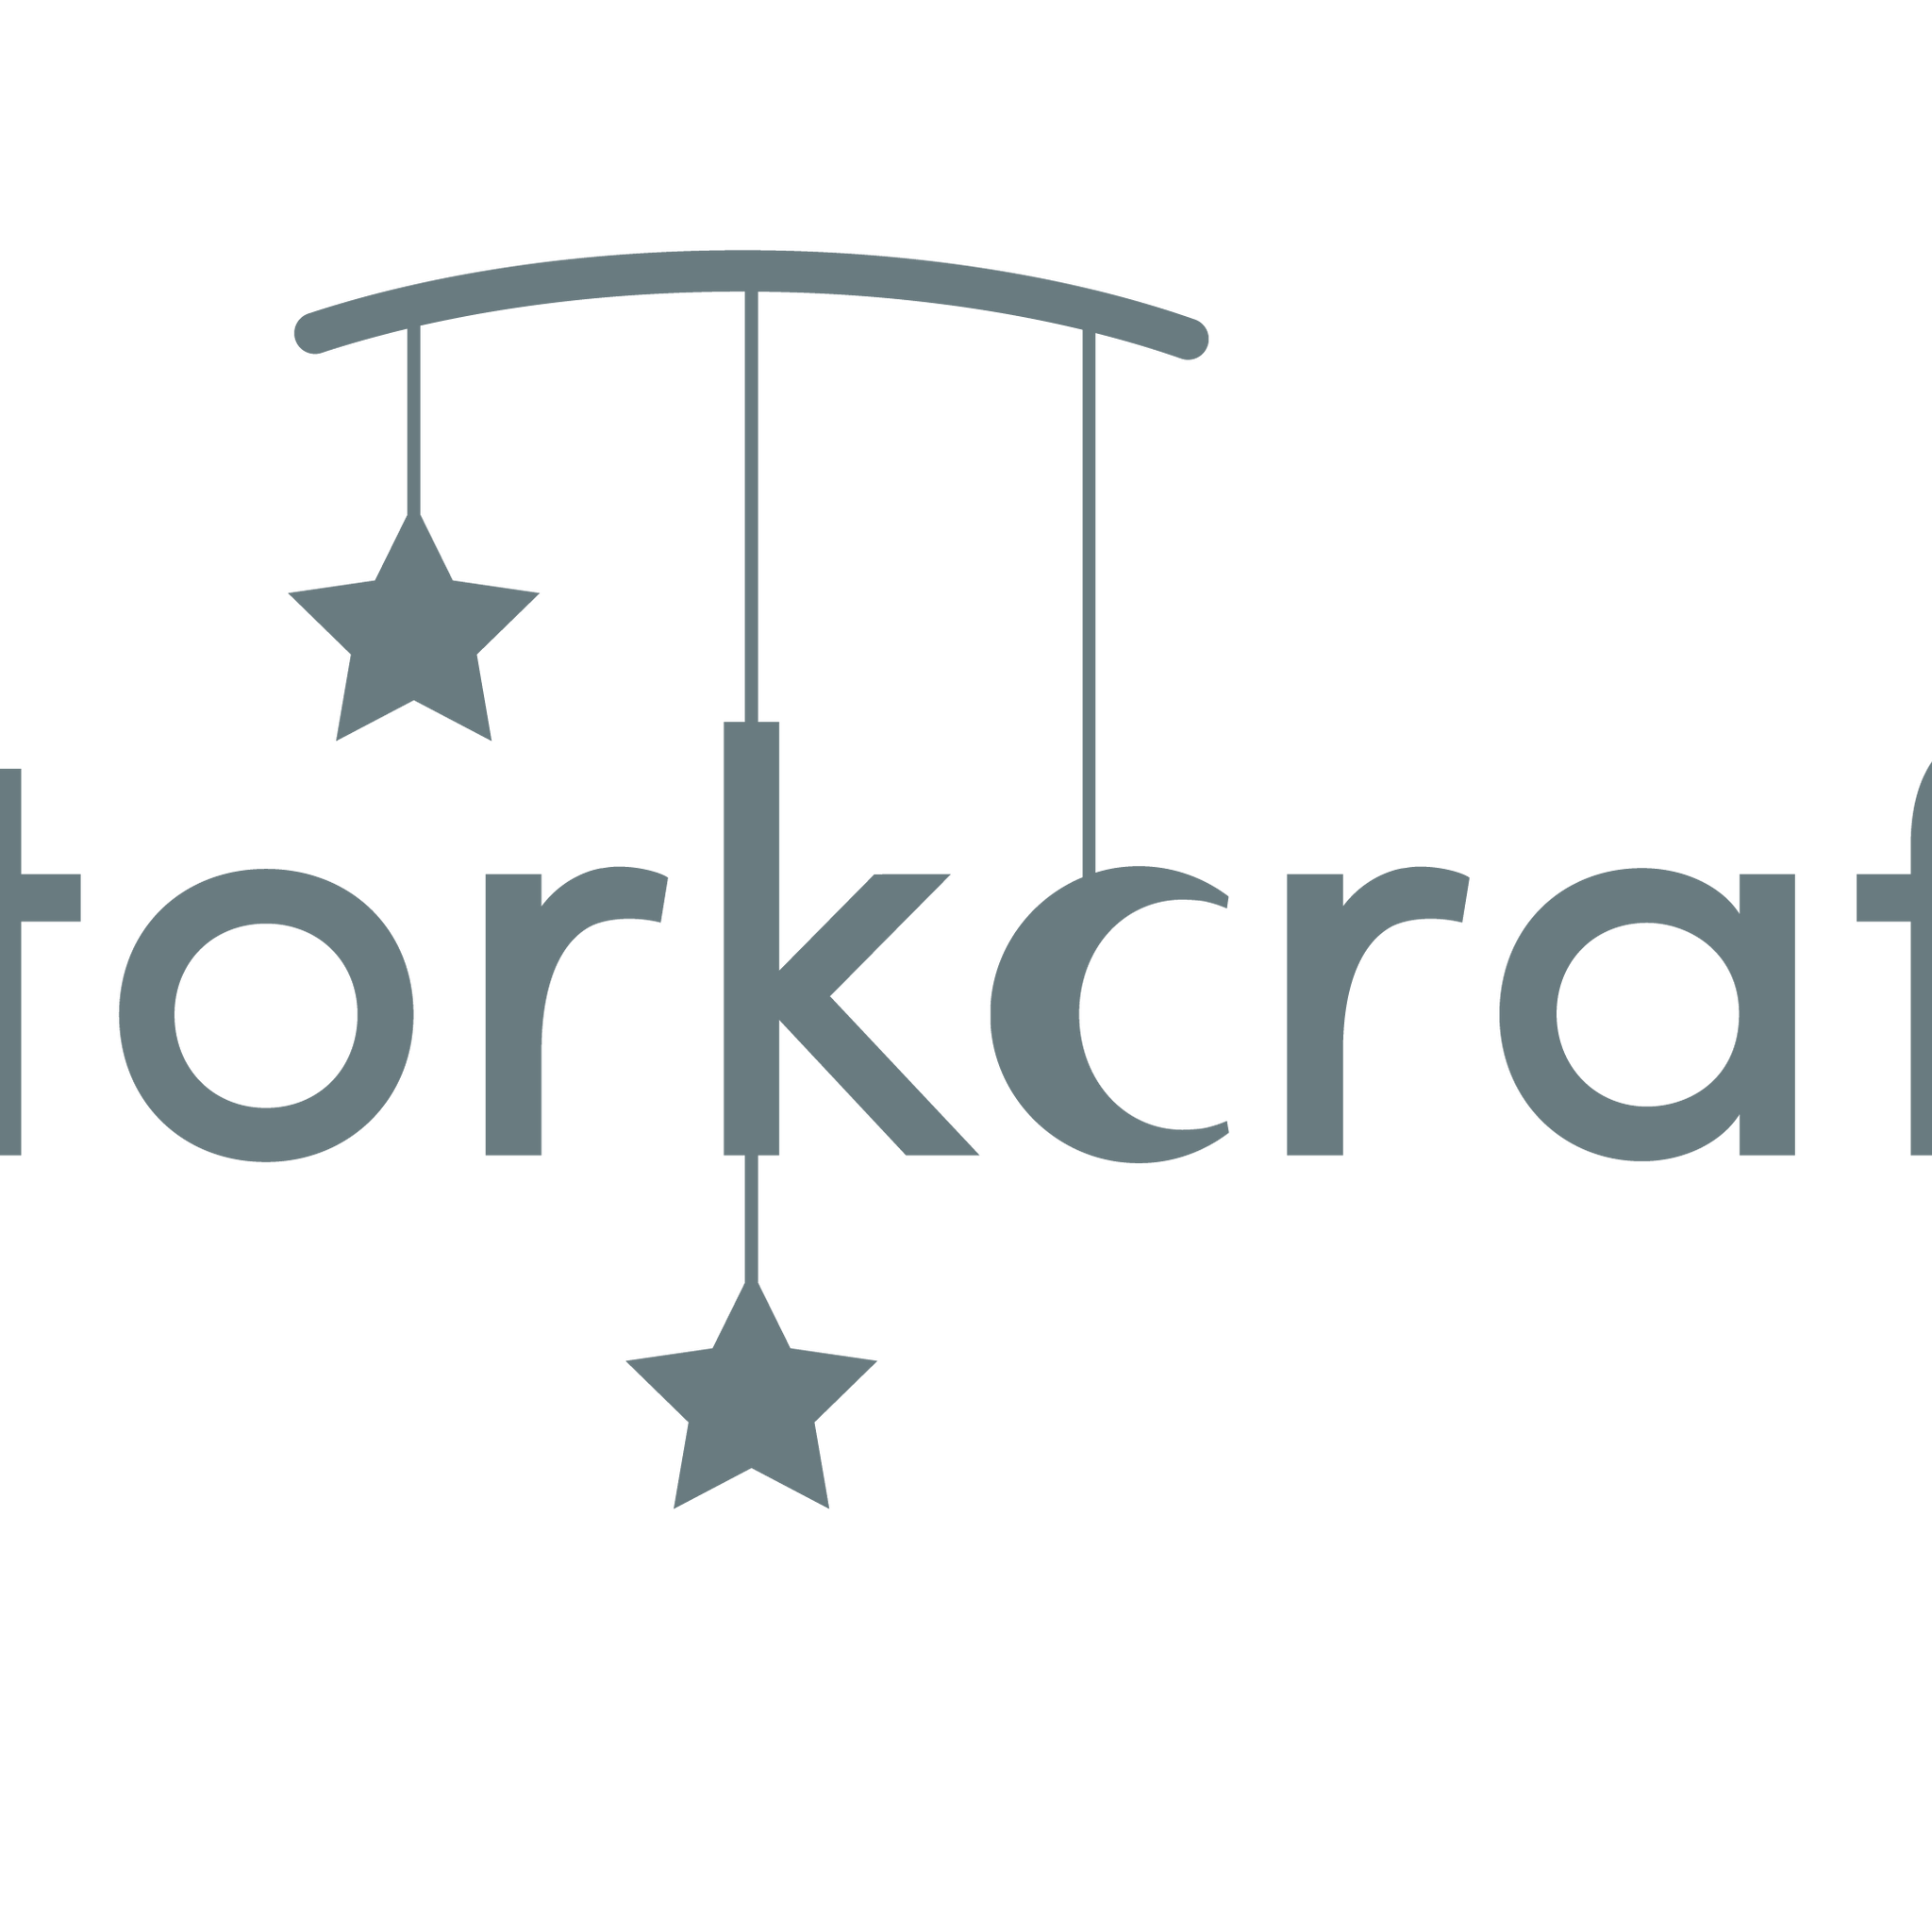 Storkcraft logo with registered trademark symbol